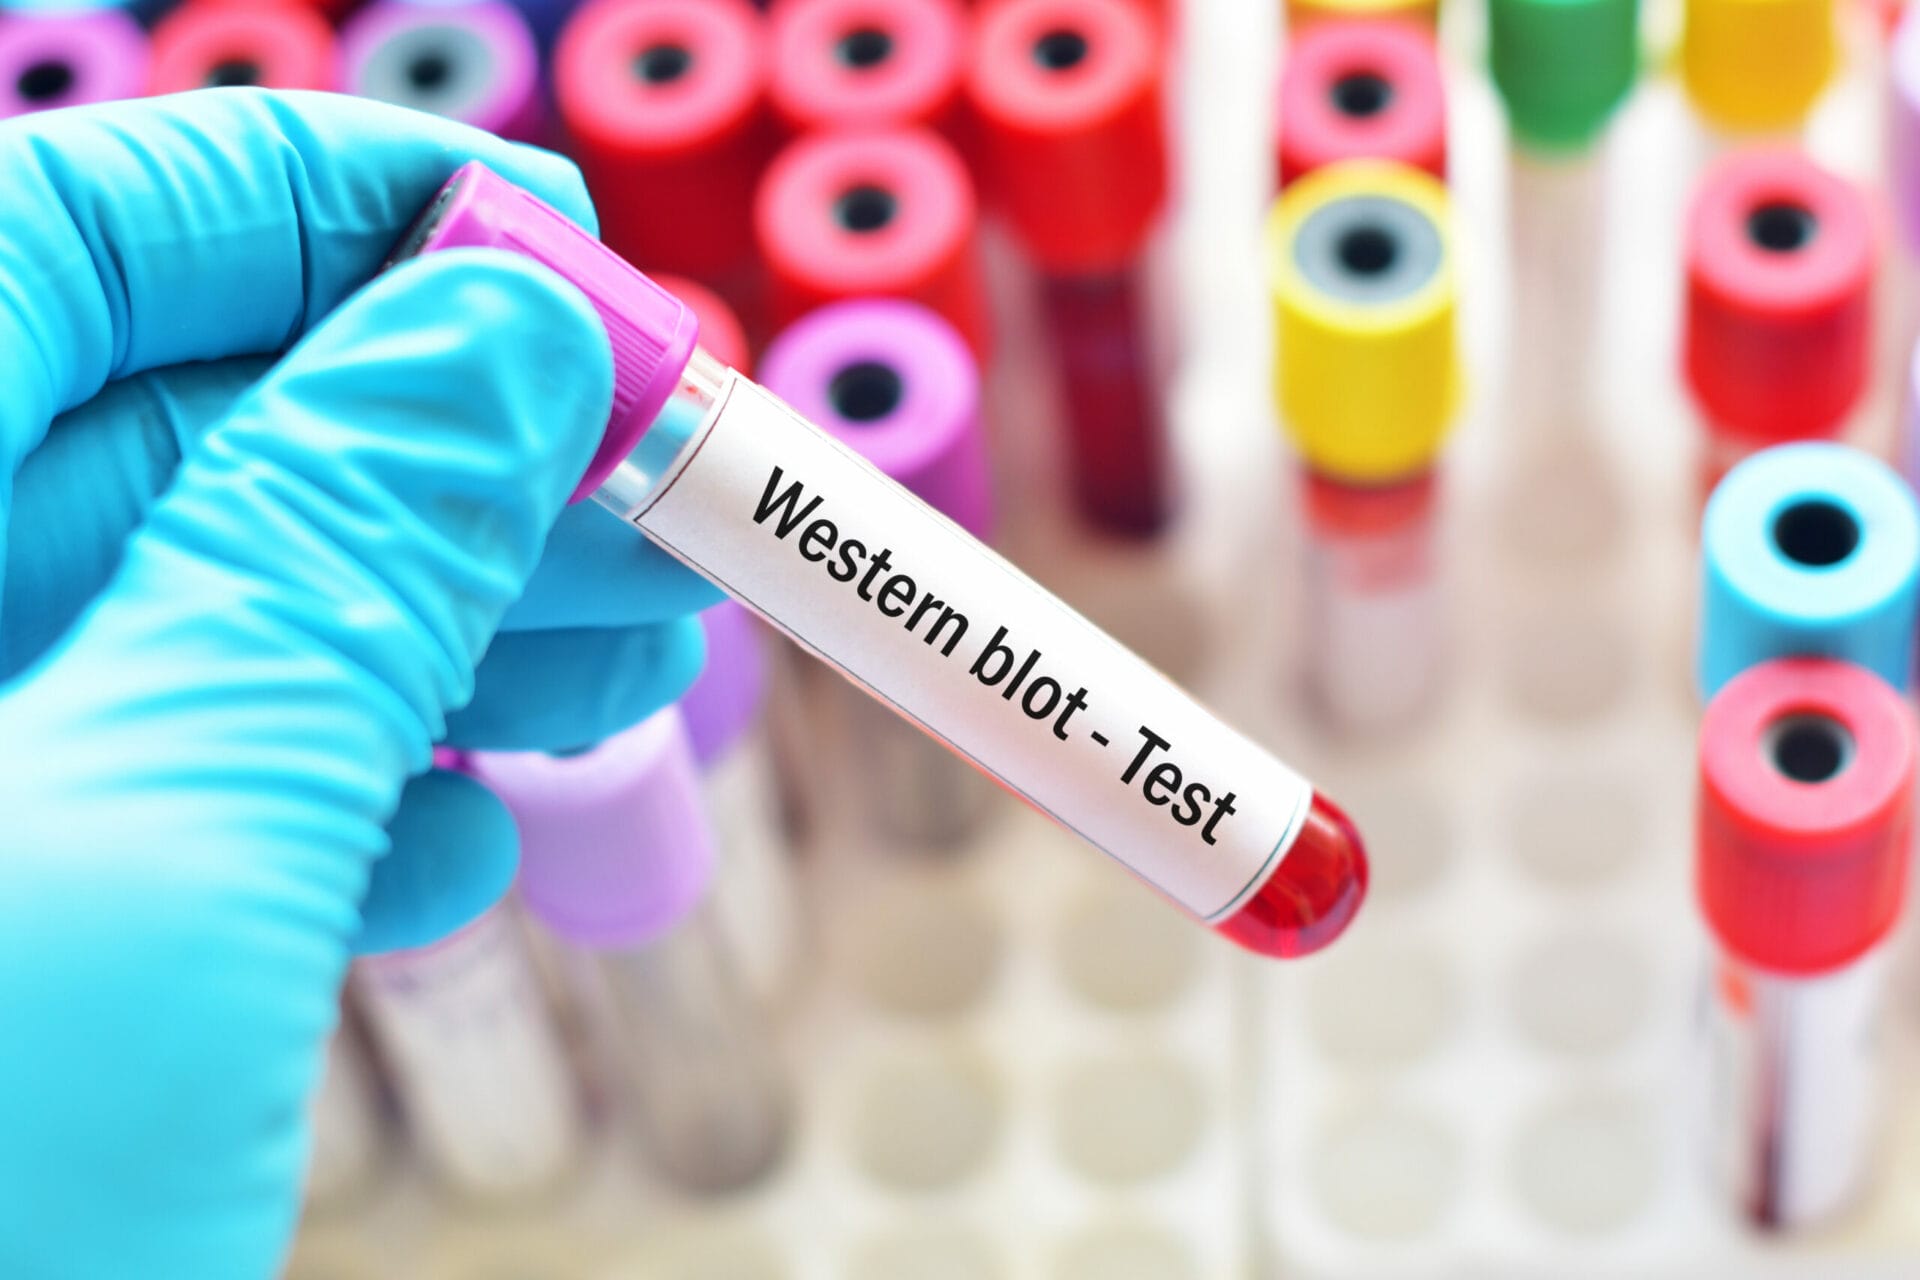 Western Blot for HIV Test In Delhi